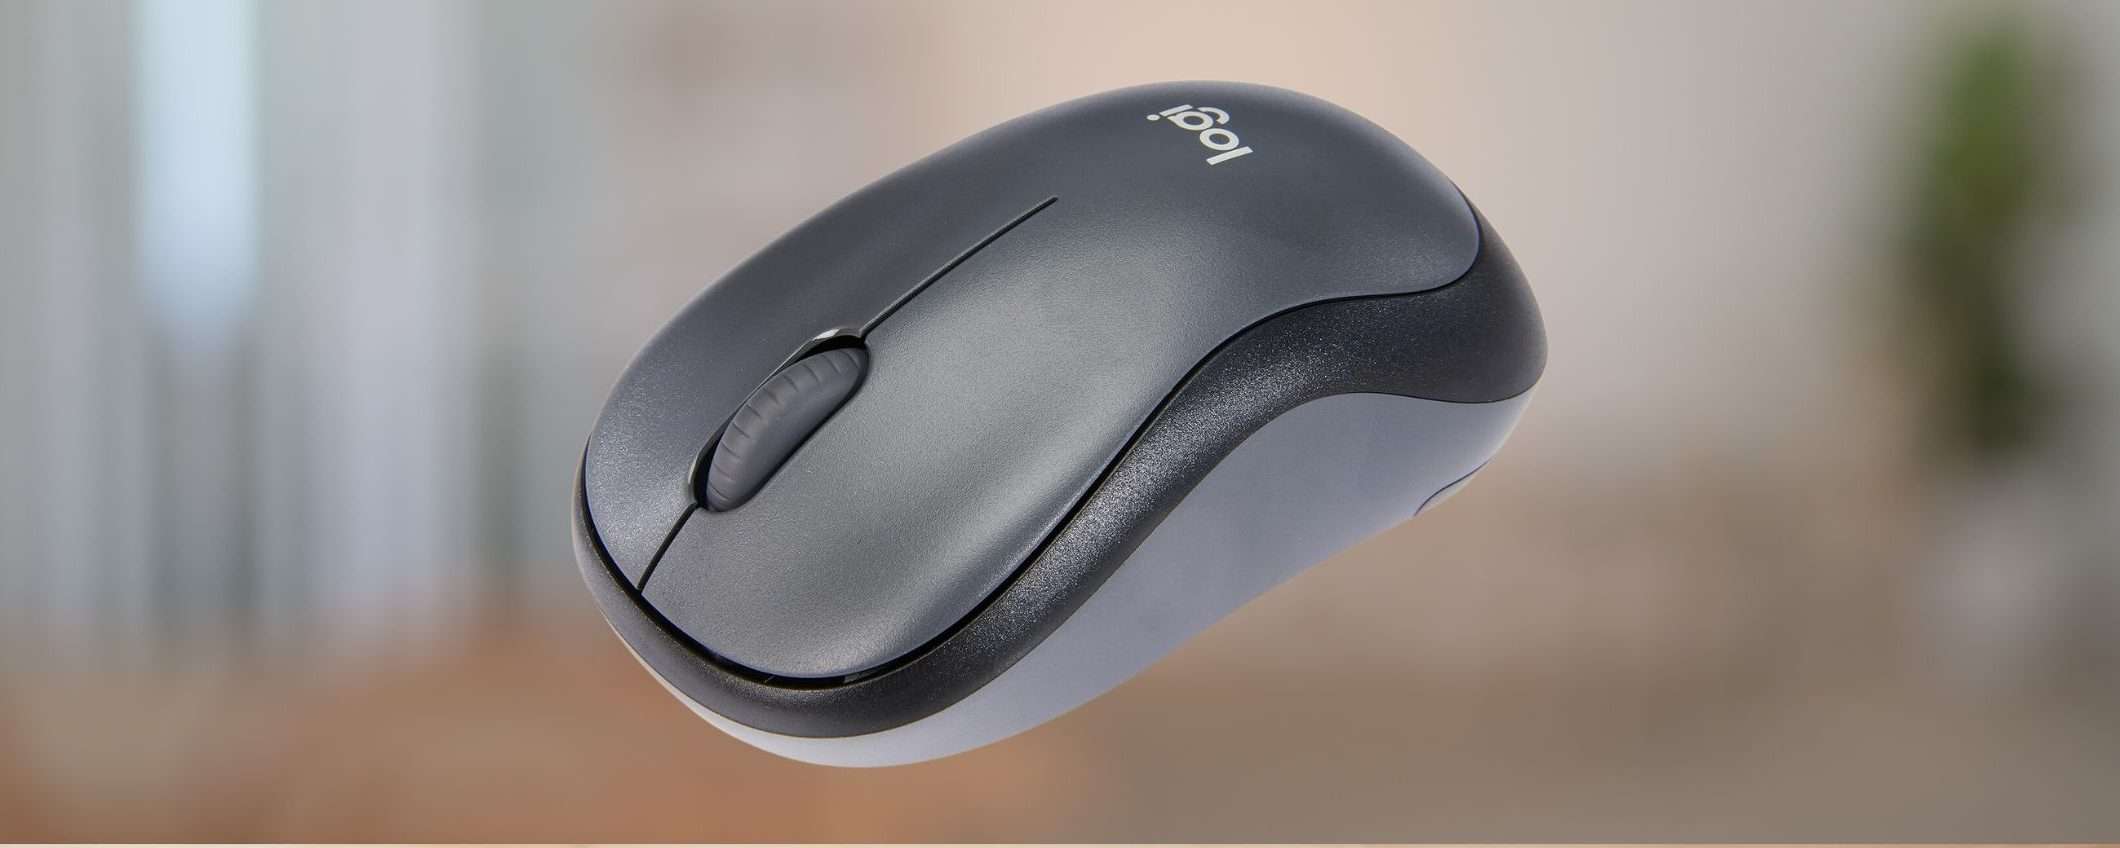 Logitech M220, il mouse wireless SILENZIOSO è in offerta a 12,99 euro (-57%)